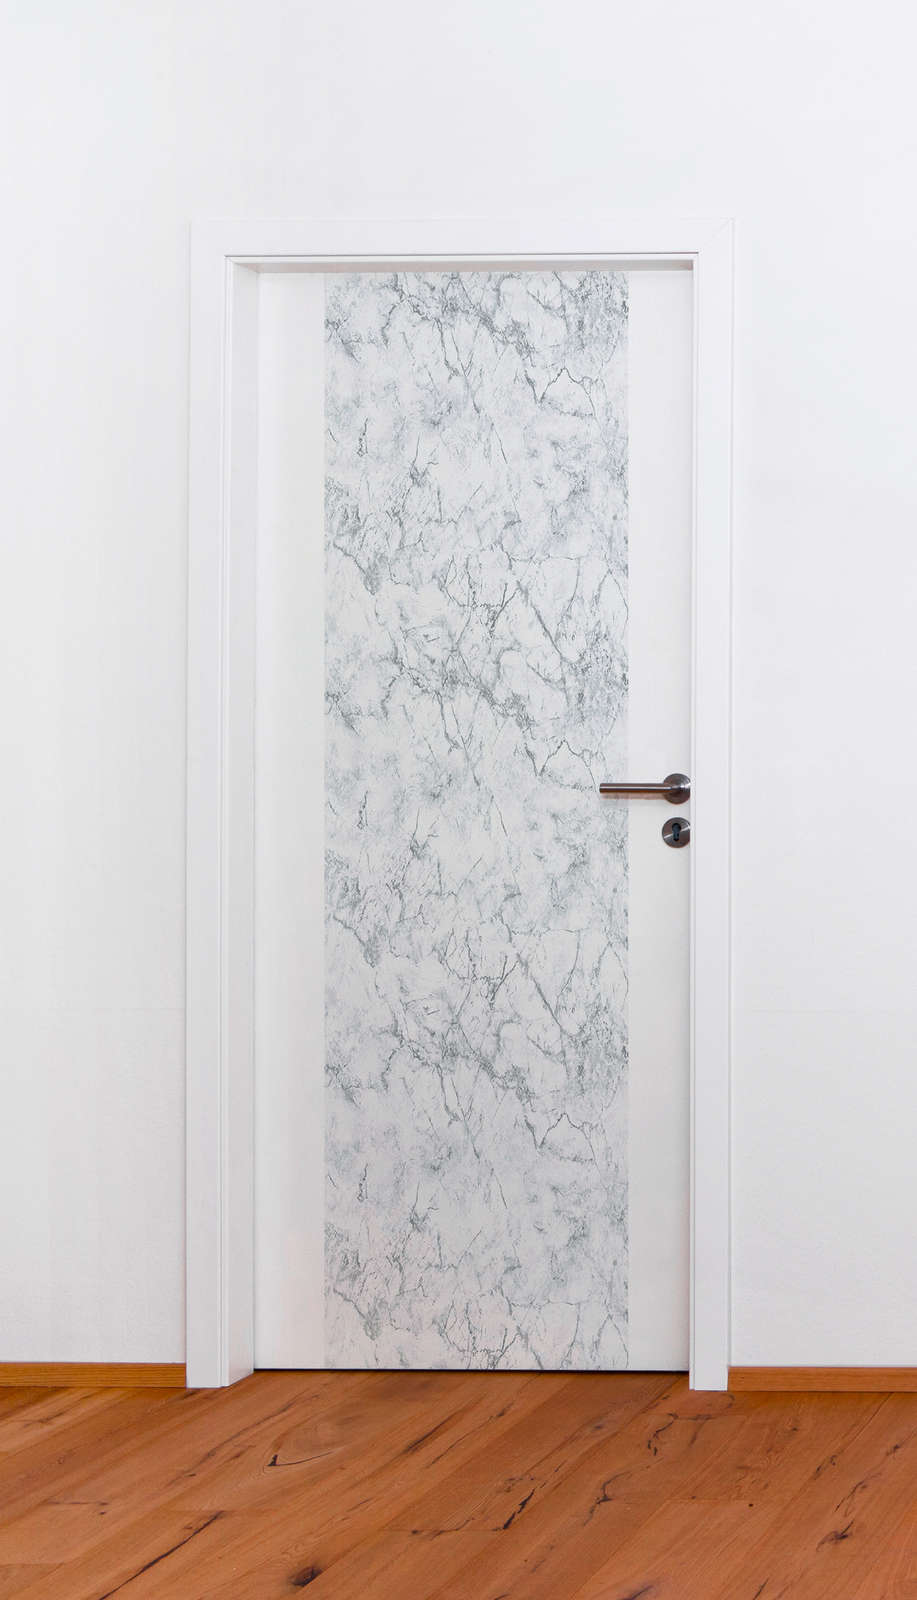             Marmor Tapete marmorierte Steinoptik – Grau, Weiß
        